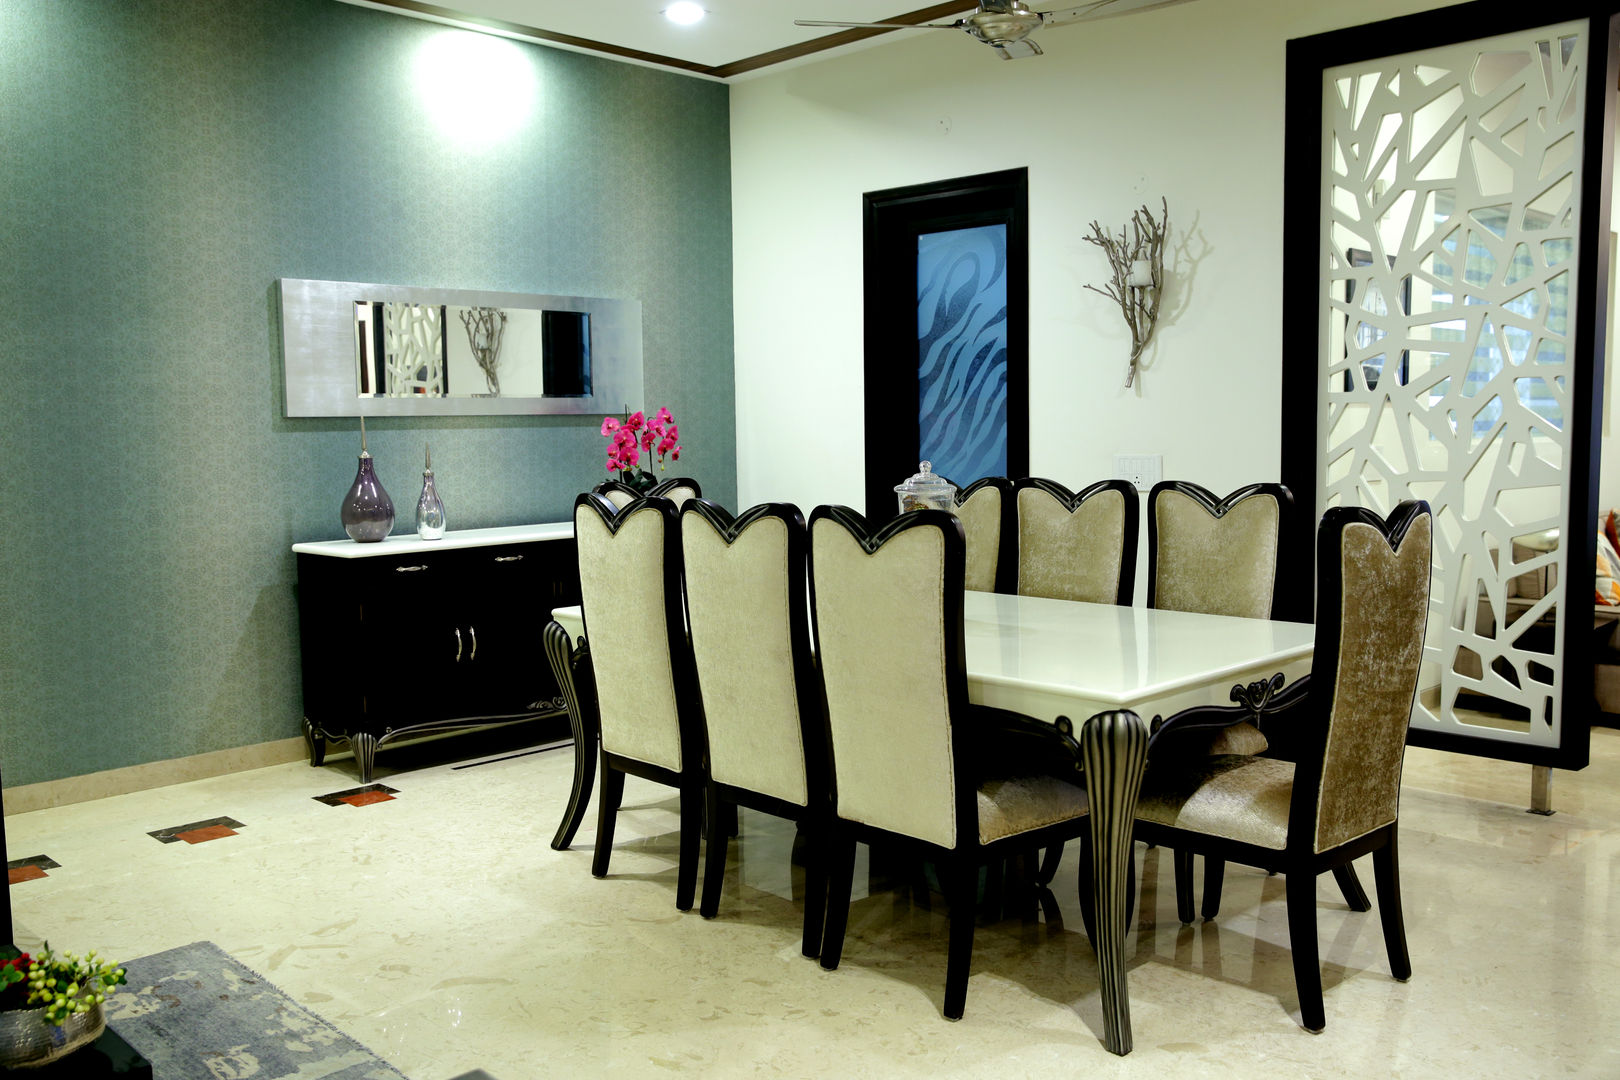 Residence, renu soni interior design renu soni interior design Phòng ăn phong cách hiện đại Accessories & decoration